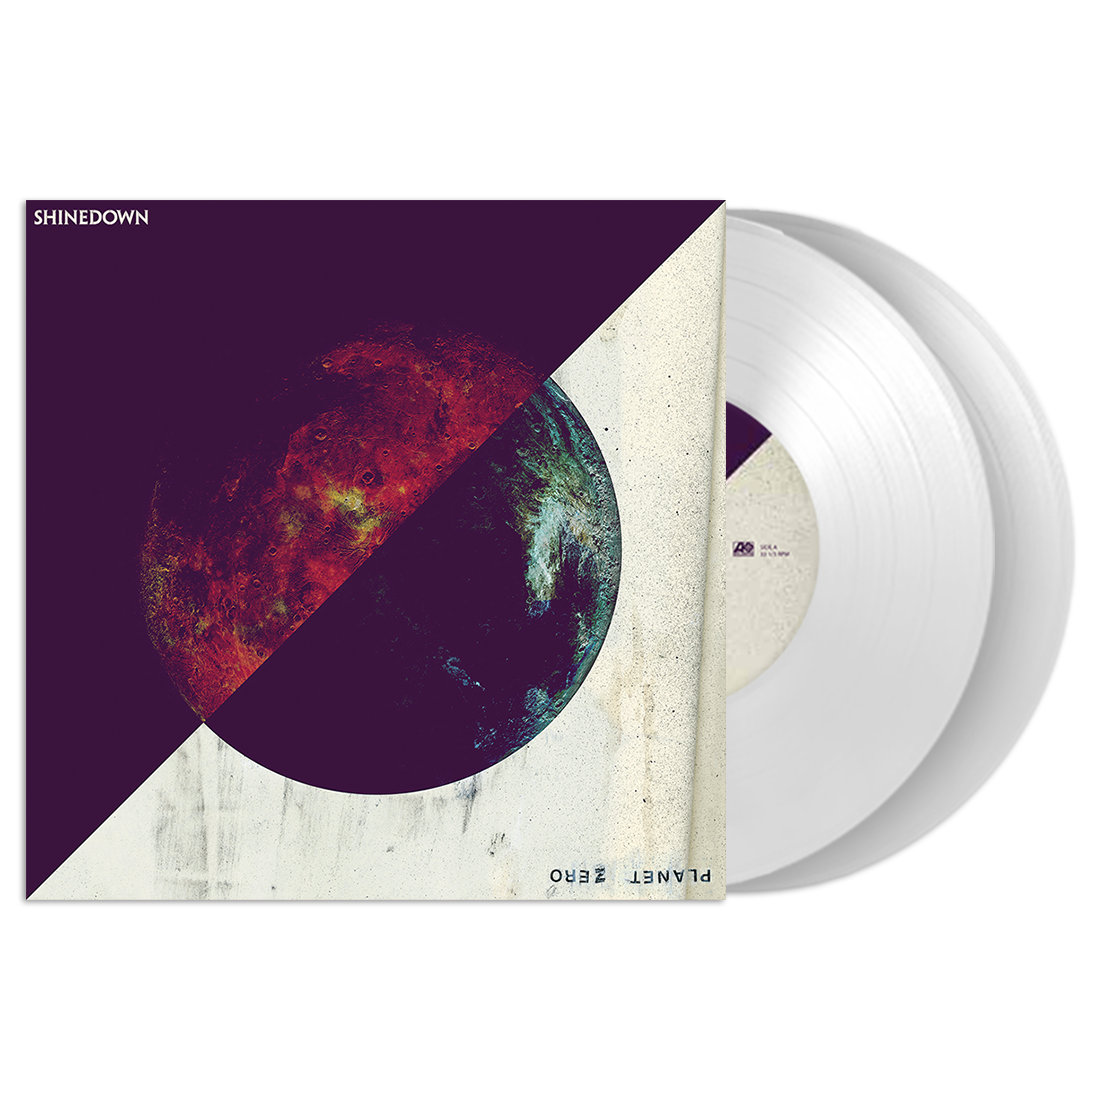 Planet Zero Limited Edition White Vinyl